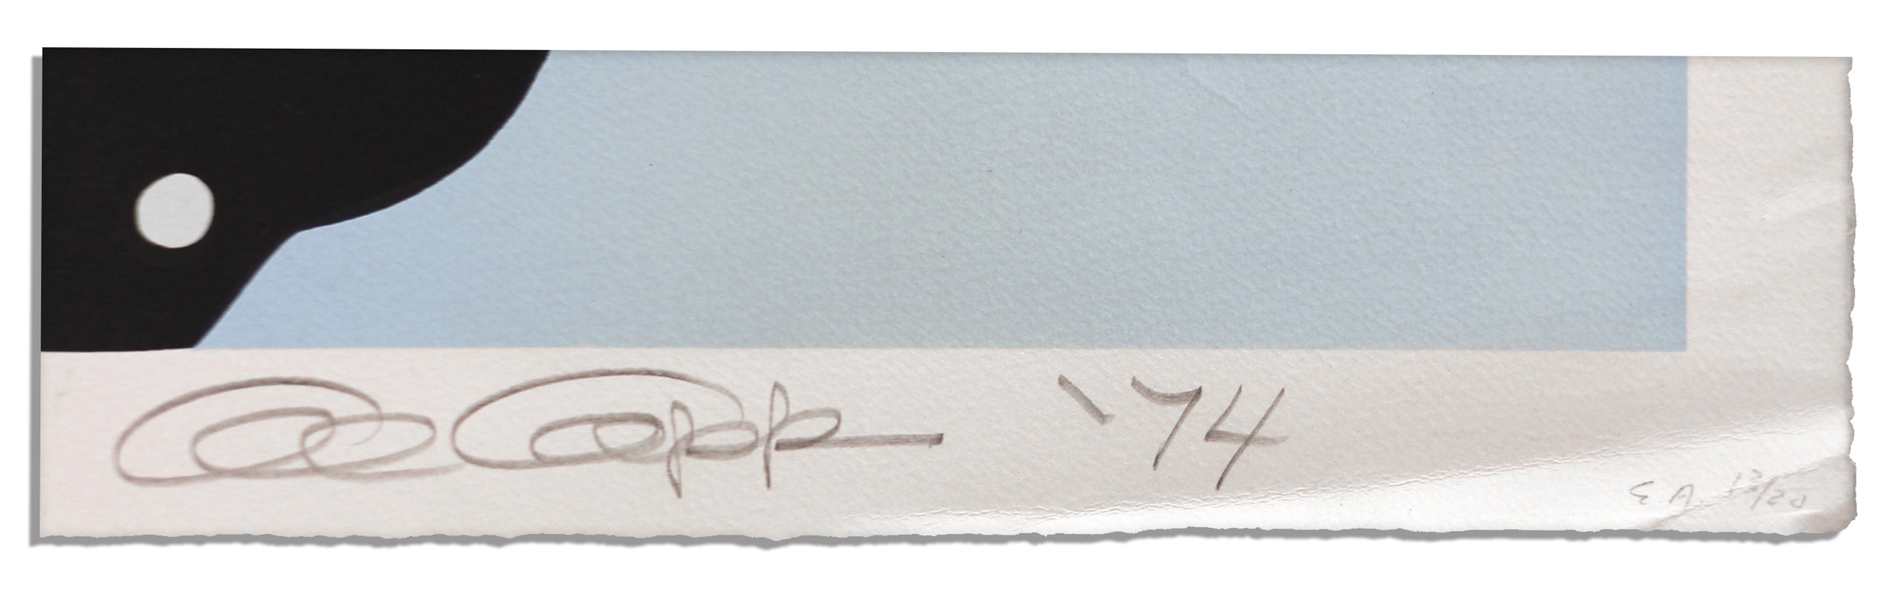 Al Capp Large & Colorful ''Li'l Abner'' Artist Proof -- Featuring Li'l Abner & Mammy Yokum -- Signed ''Al Capp'' in Pencil & Numbered ''ea 13/20'' -- 29.5'' x 20.5'' -- Very Good Plus